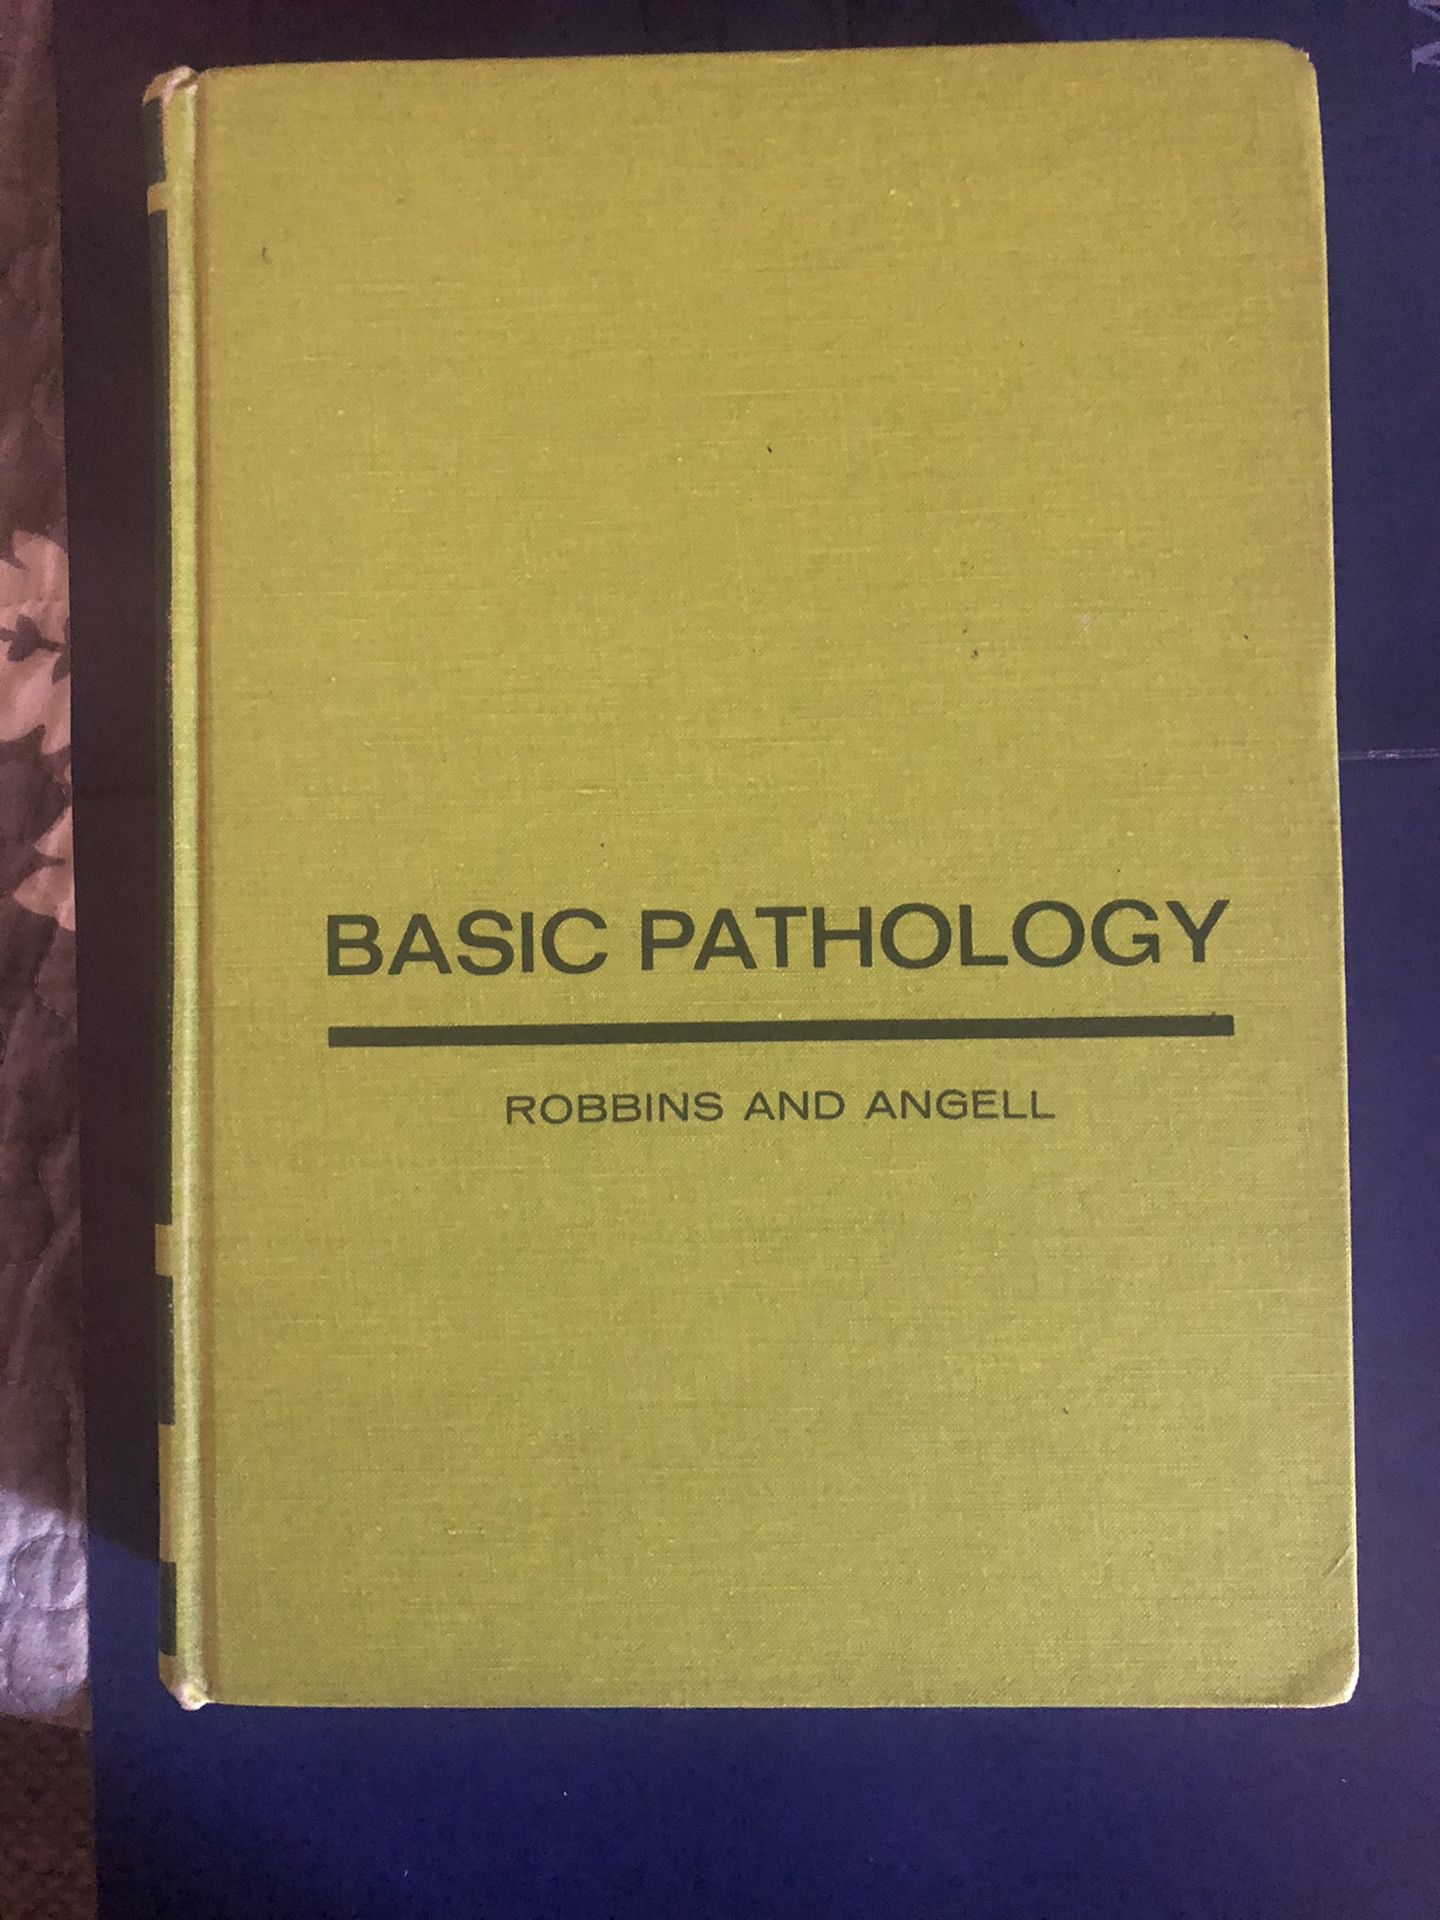 Basic Pathology. Robbins and Angell 2nd edition